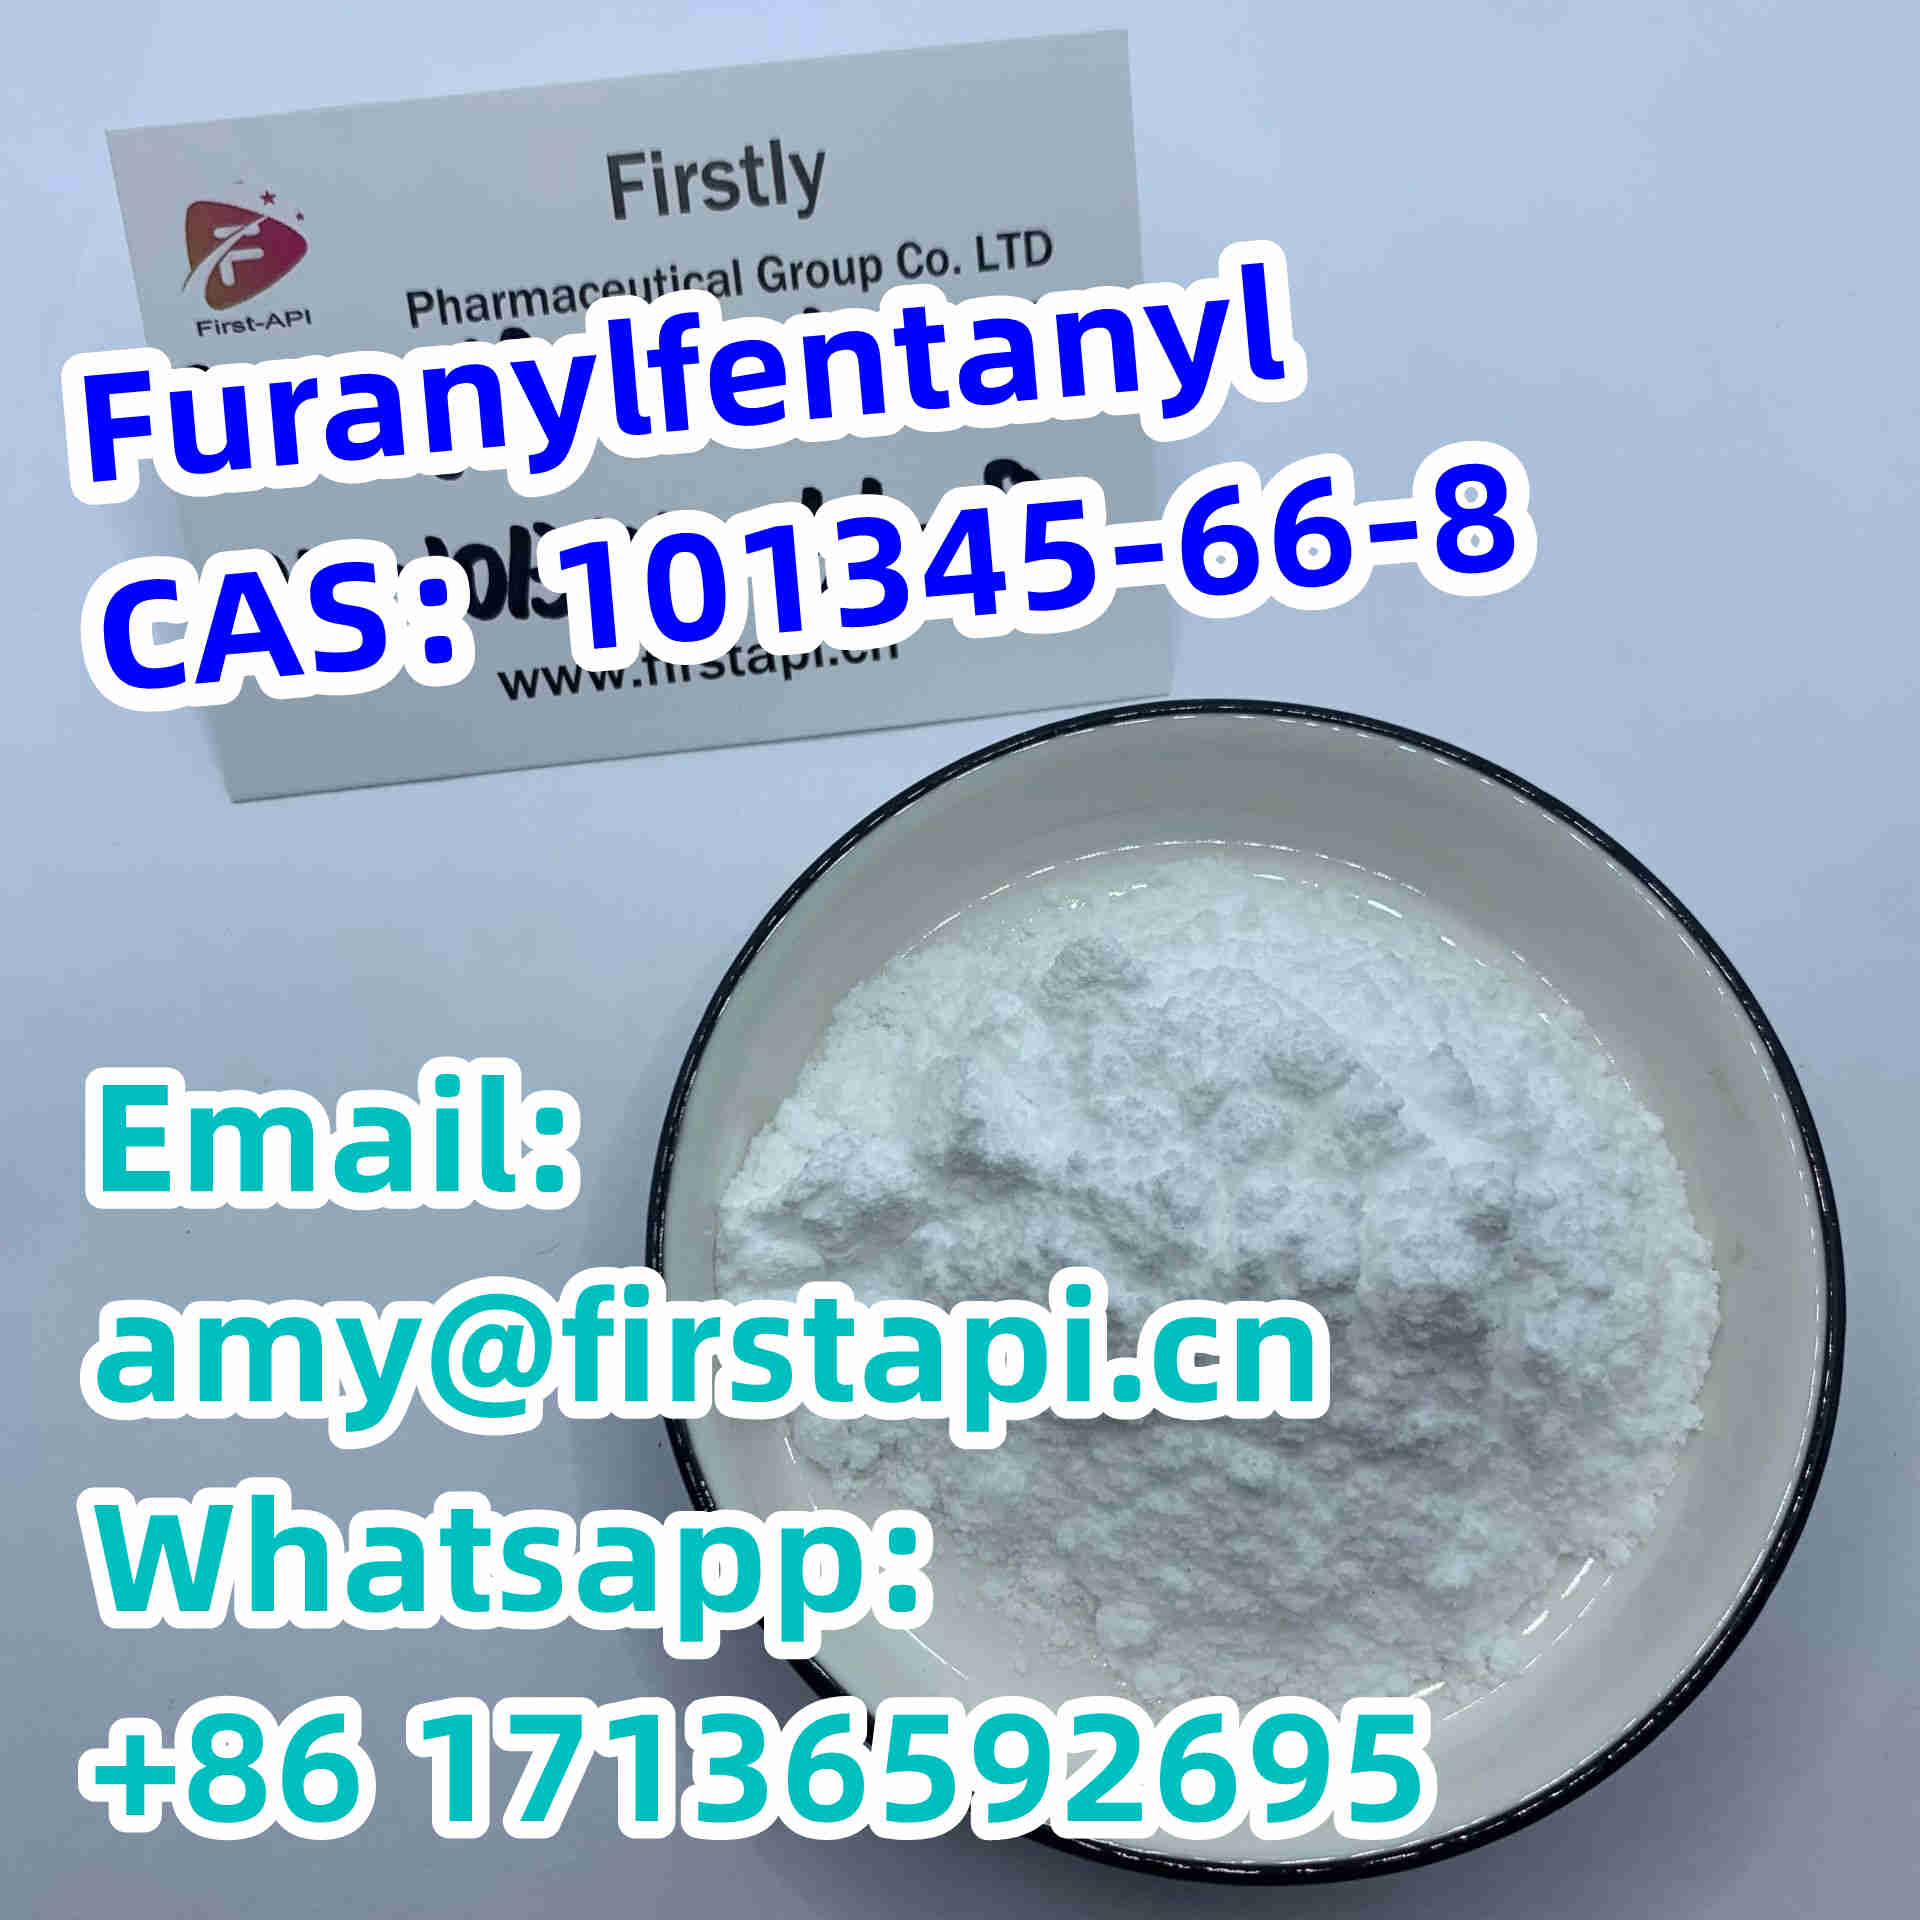 CAS No.:101345-66-8,Furanylfentanyl,Whatsapp:+86 17136592695, - photo